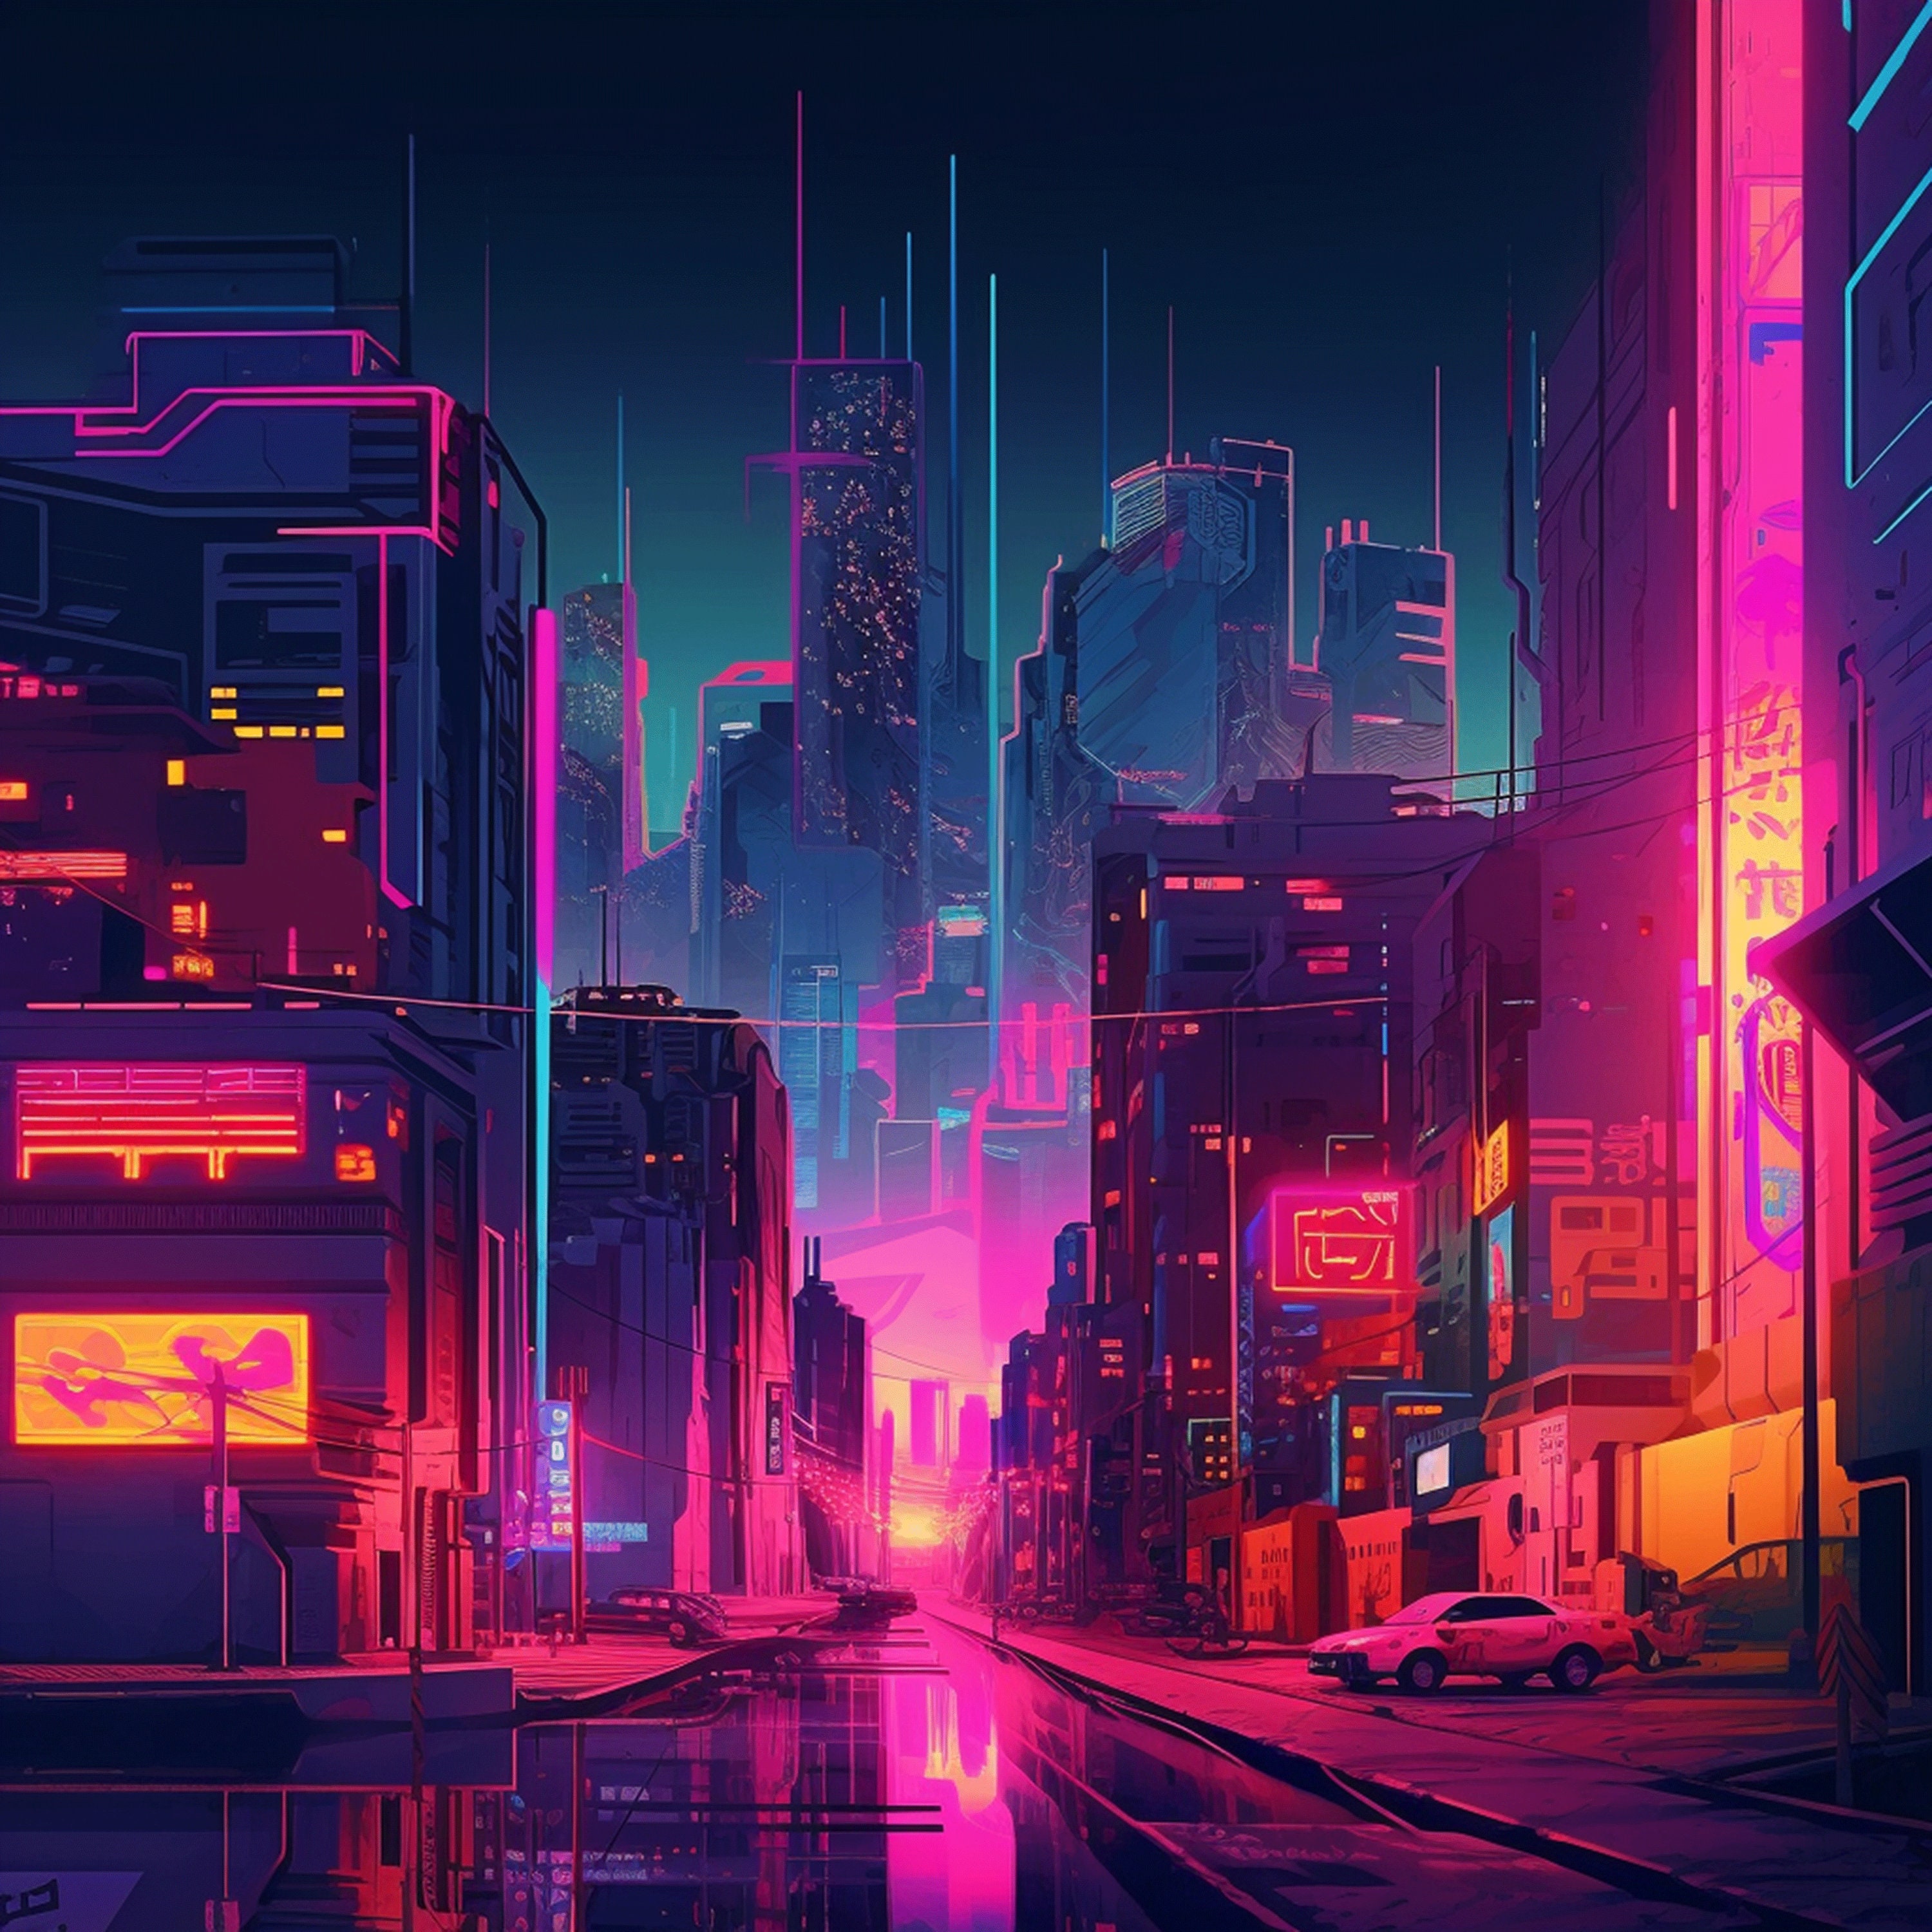 Cyberpunk Neon City Scape Digital Print Art Work (Download Now) - Etsy